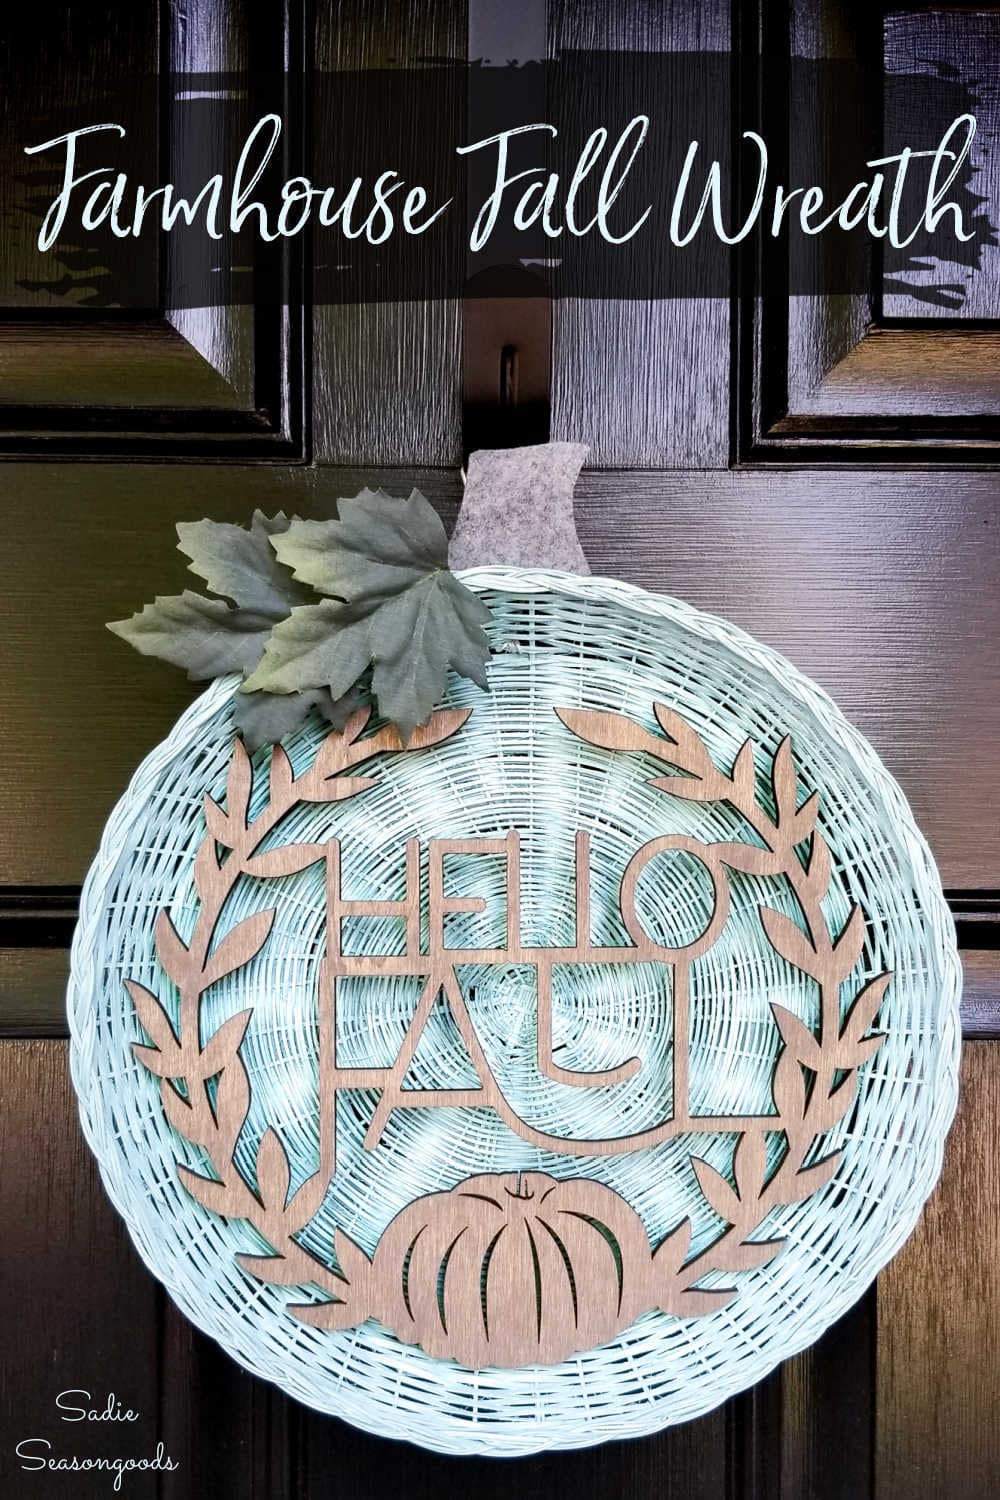 farmhouse fall wreath from a wicker plate holder